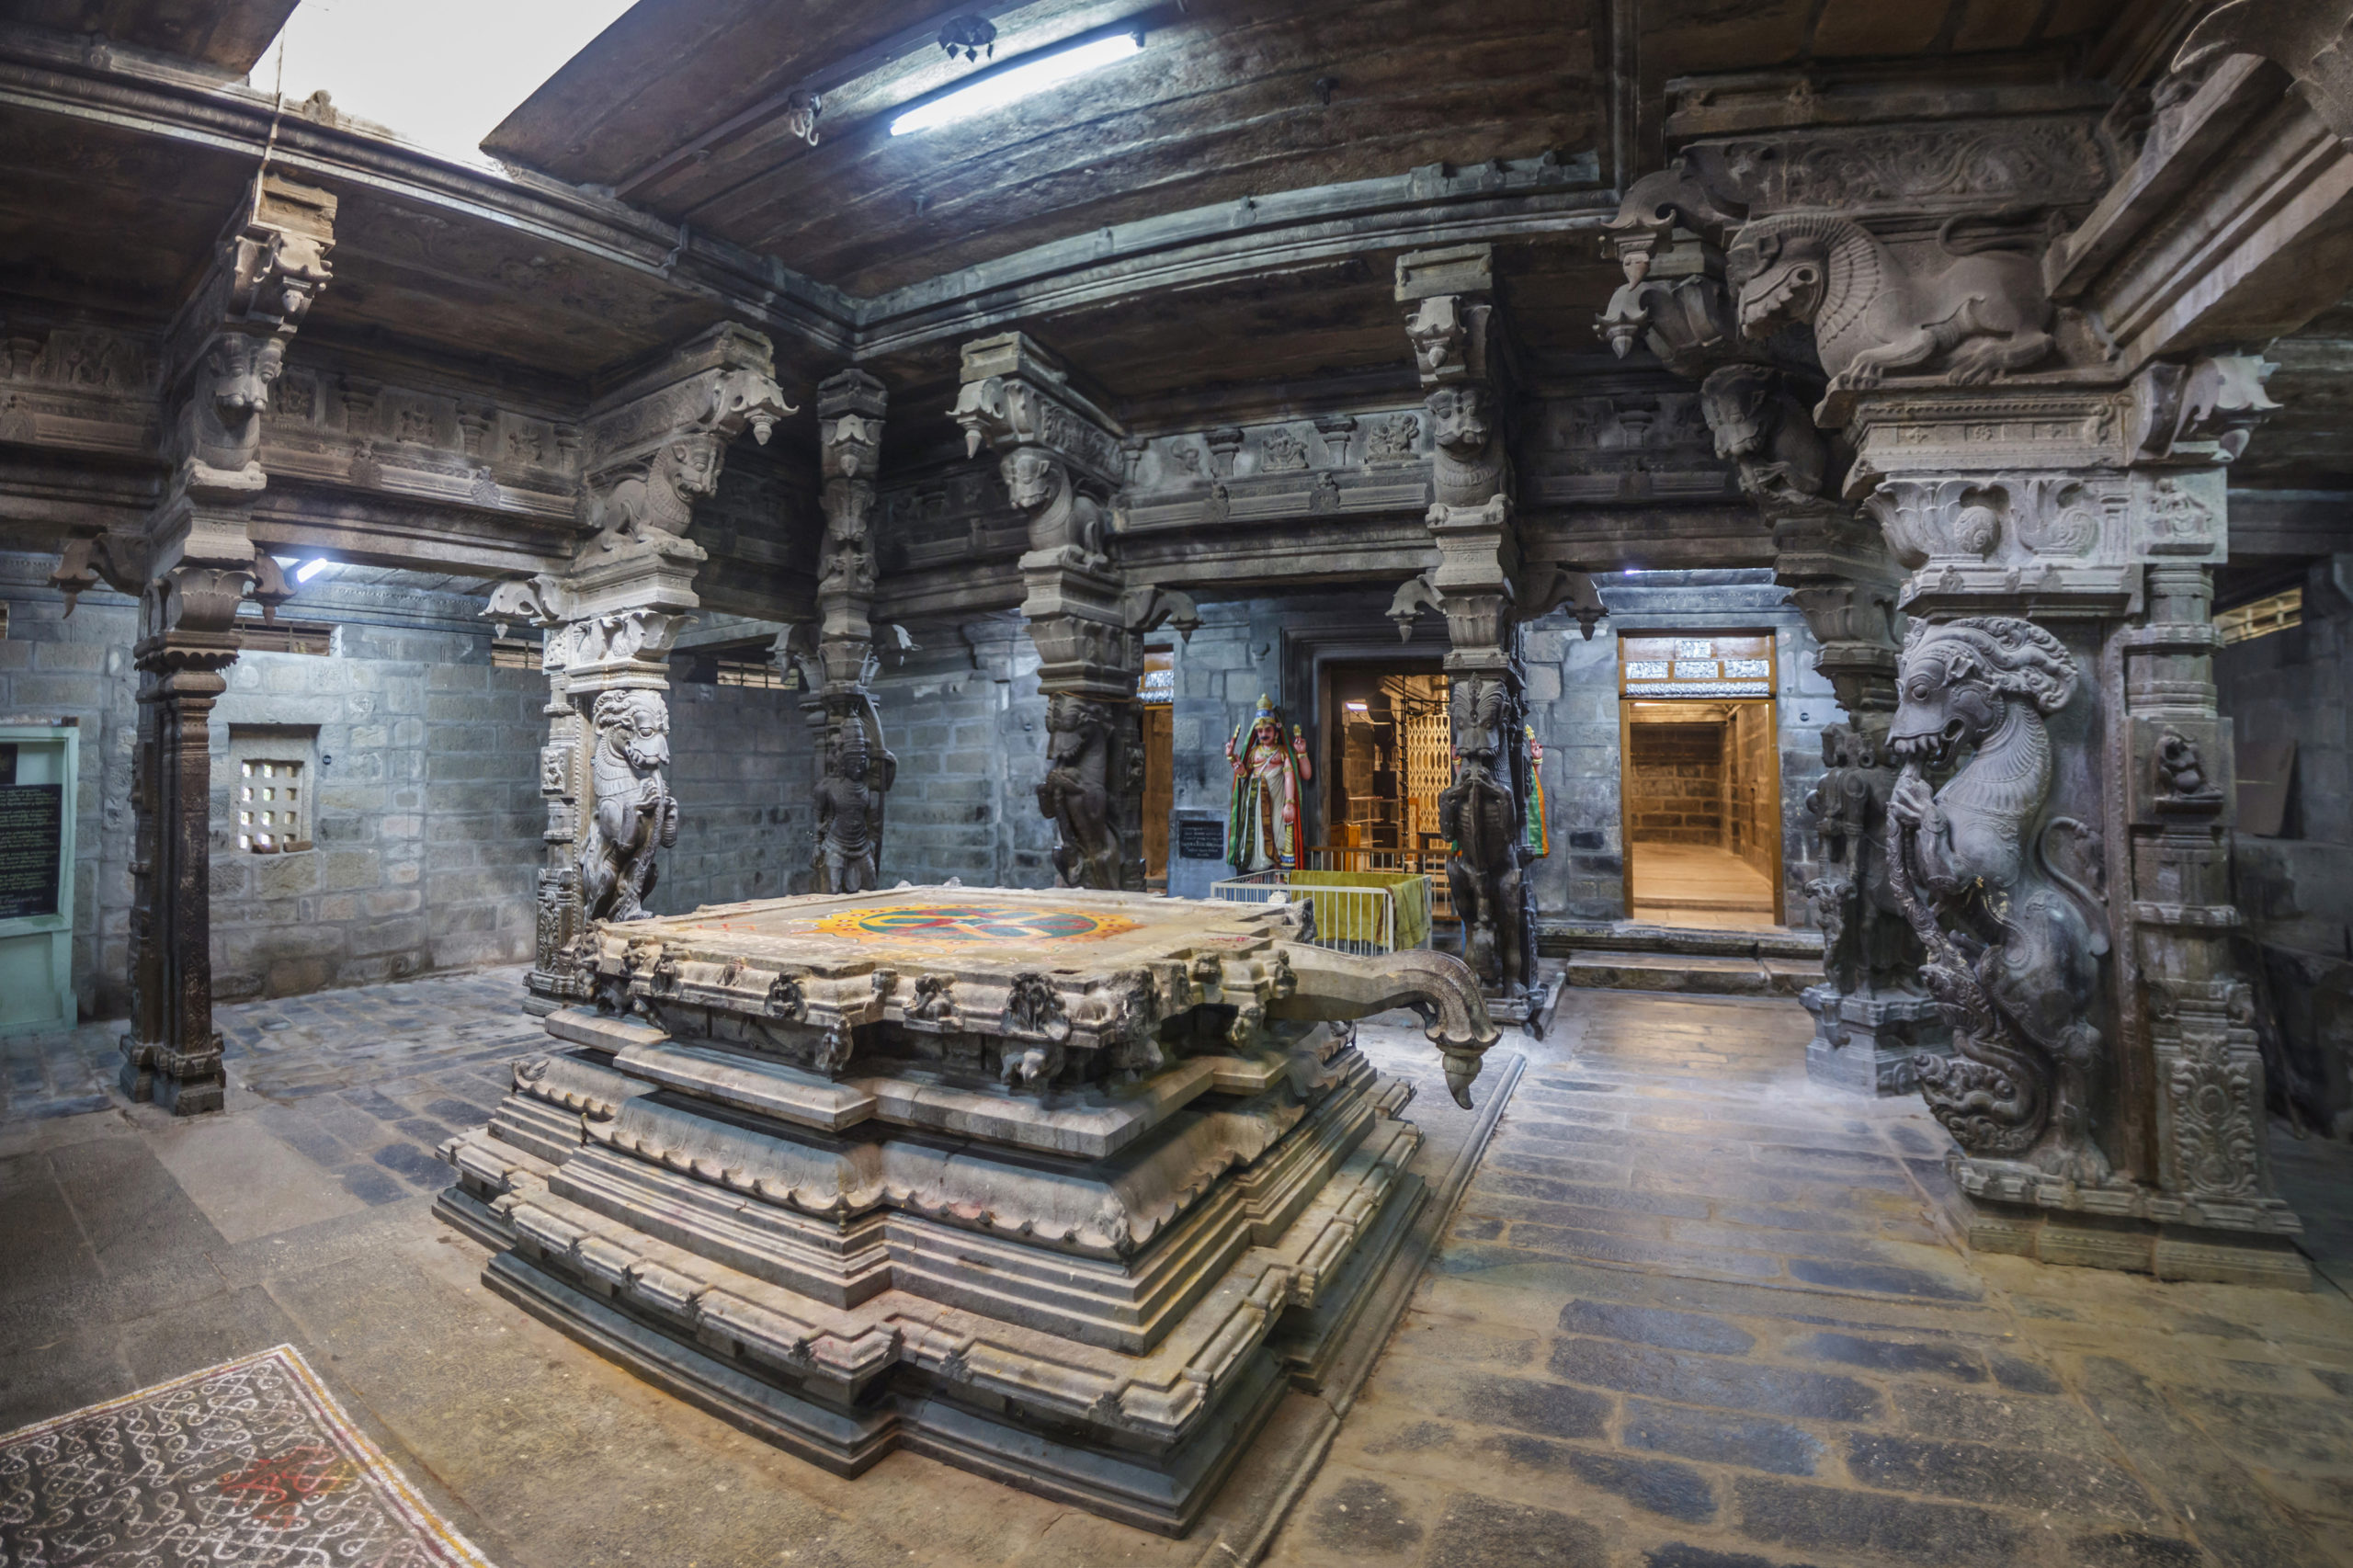 Inside an Ancient Hindu temple